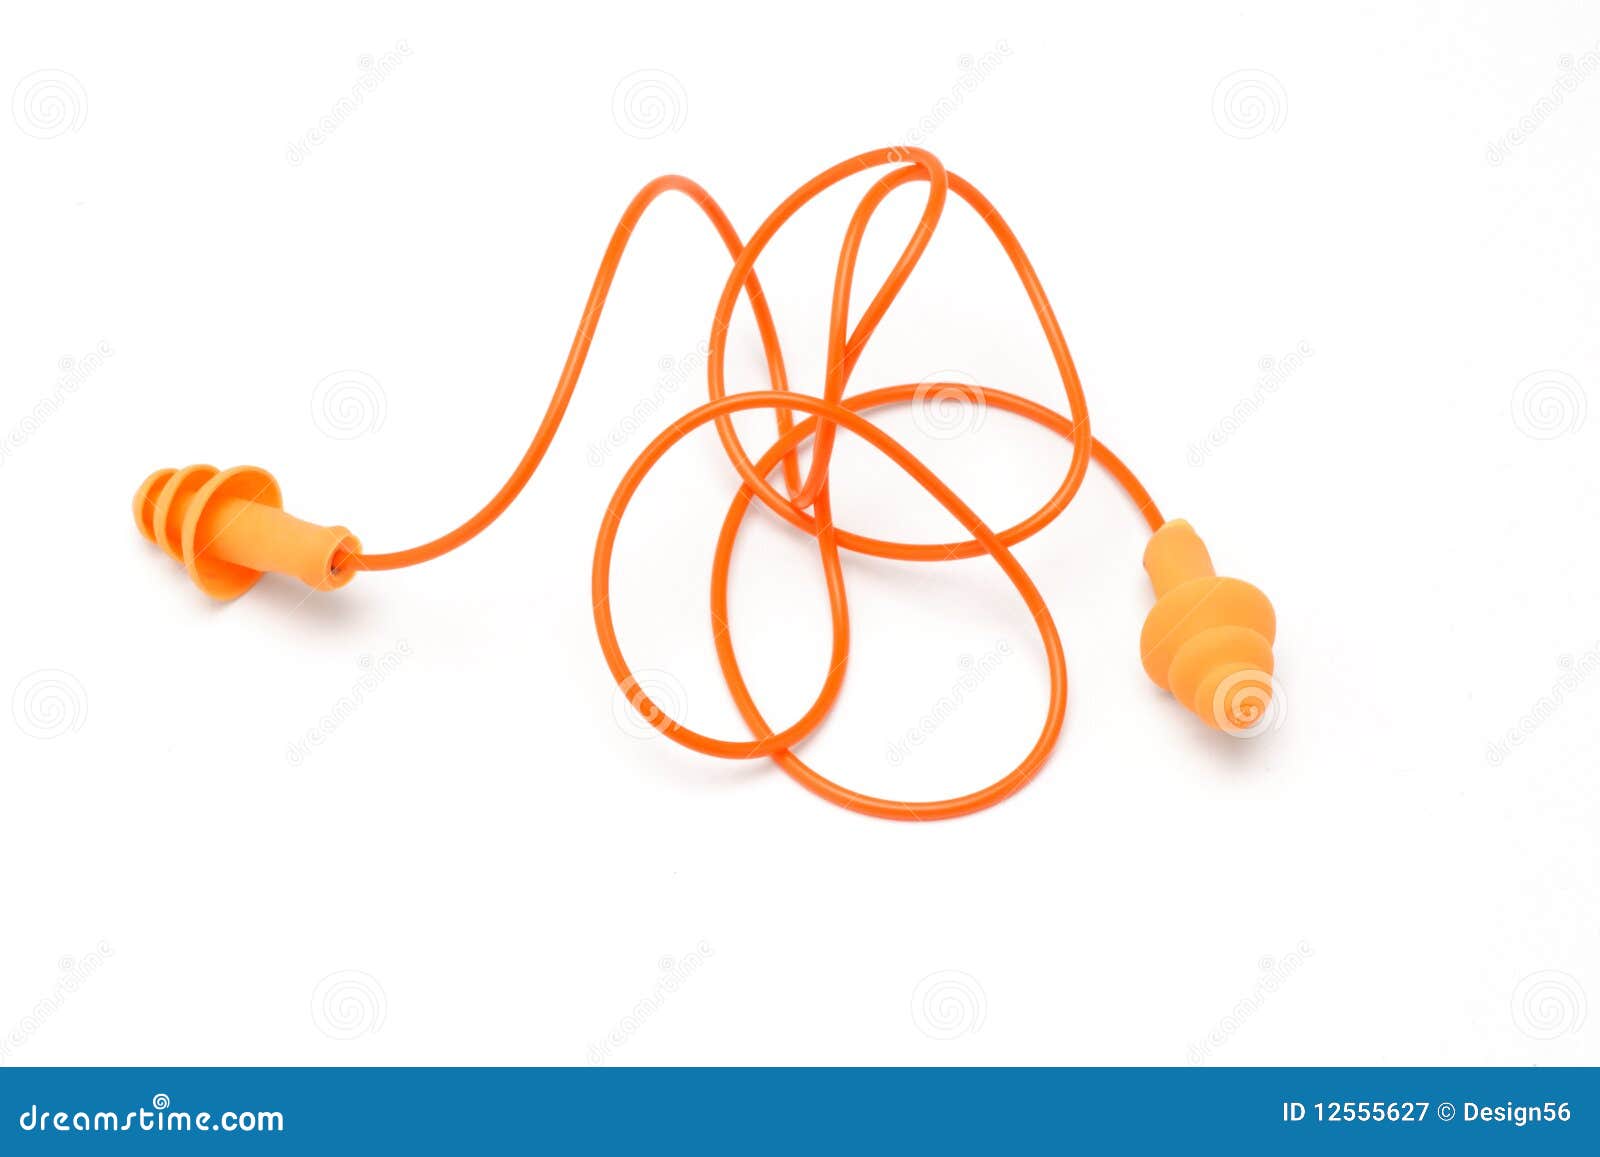 free clip art ear plugs - photo #5